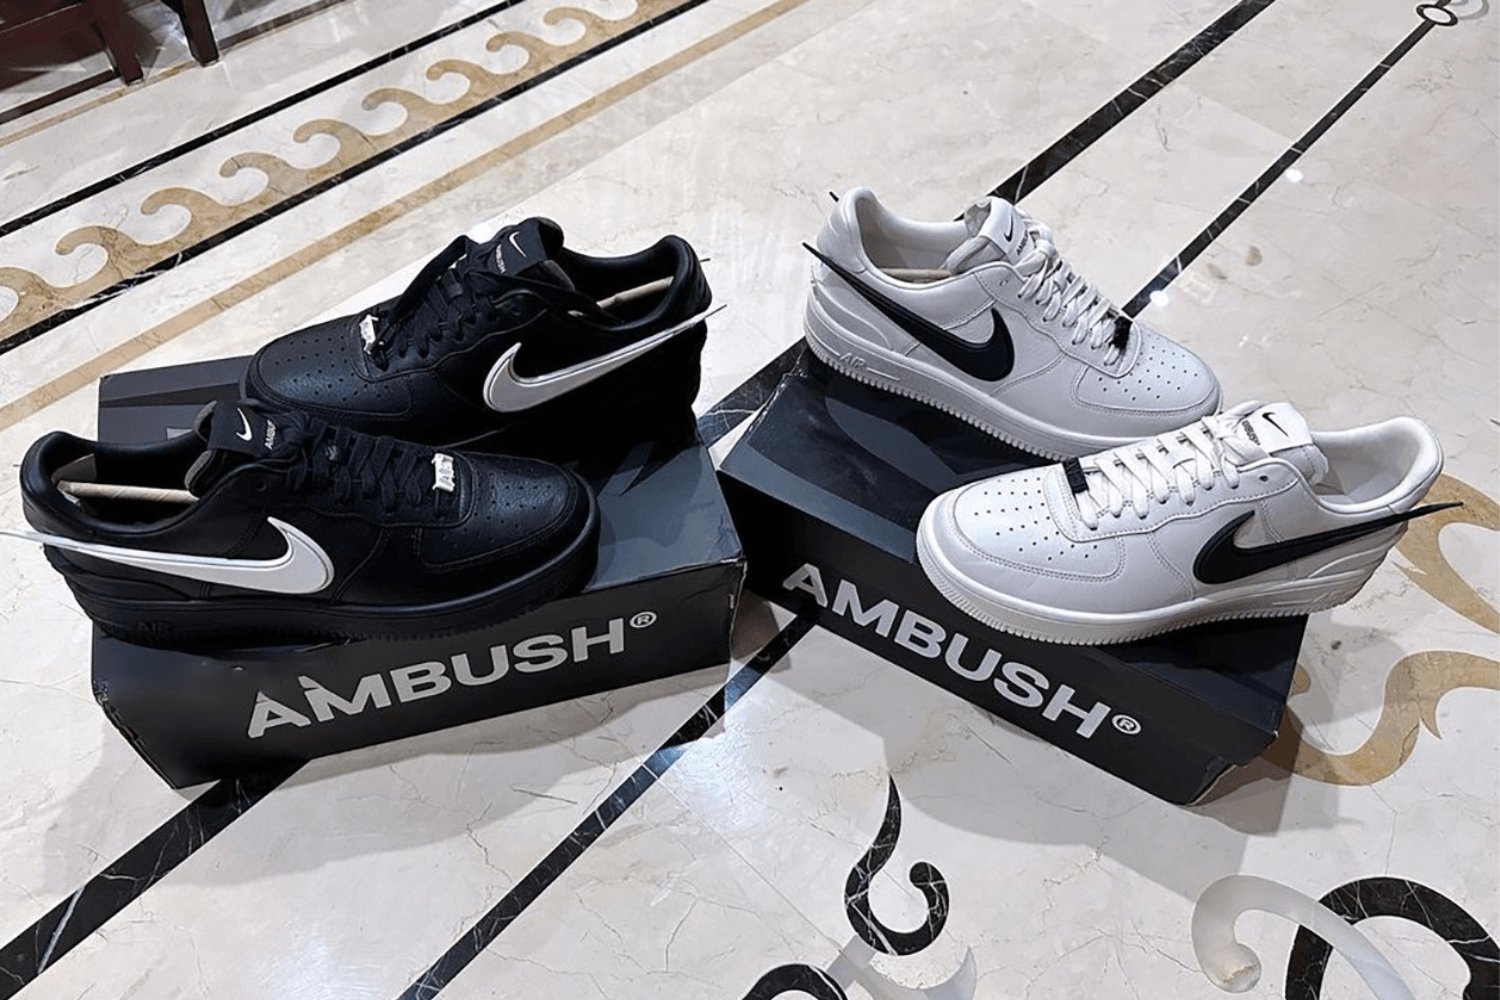 AMBUSH x Nike Air Force 1 Low komt in drie colorways